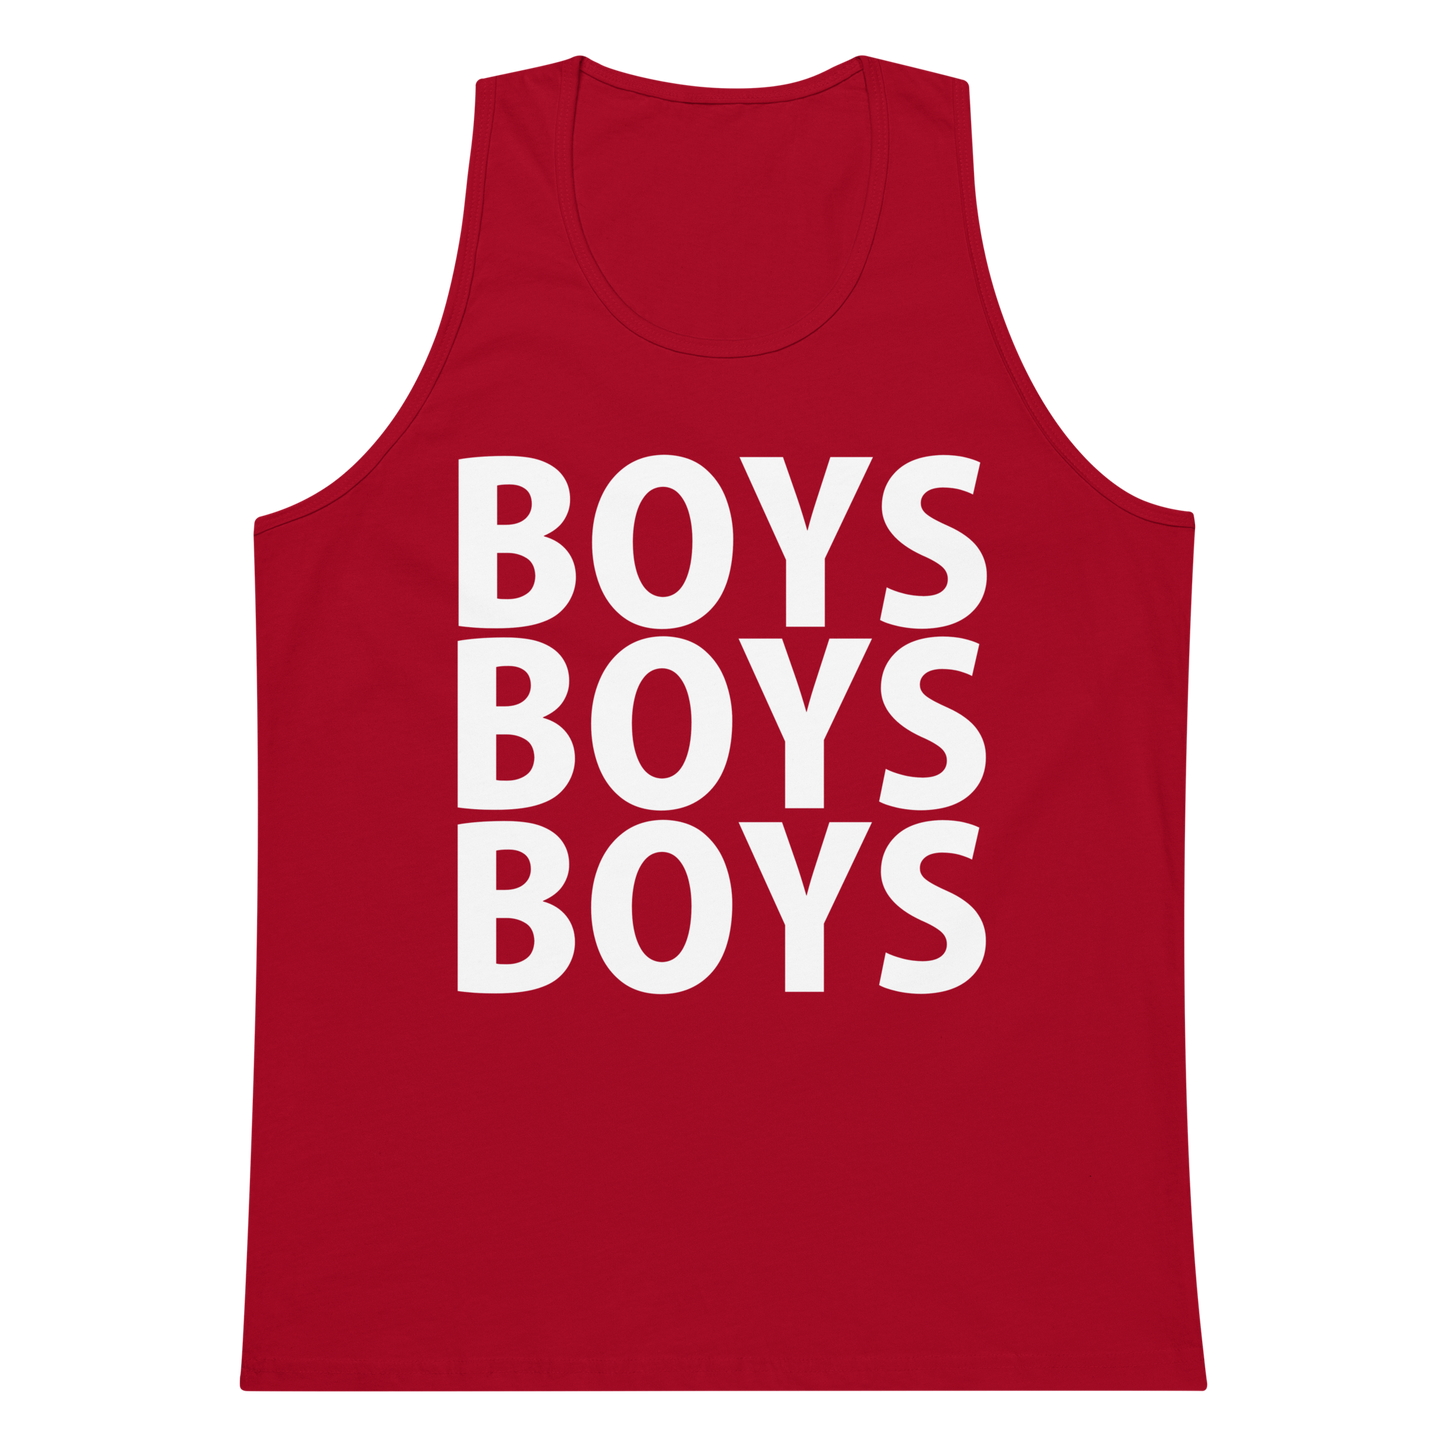 Boys Boys Boys Tank Top - Red